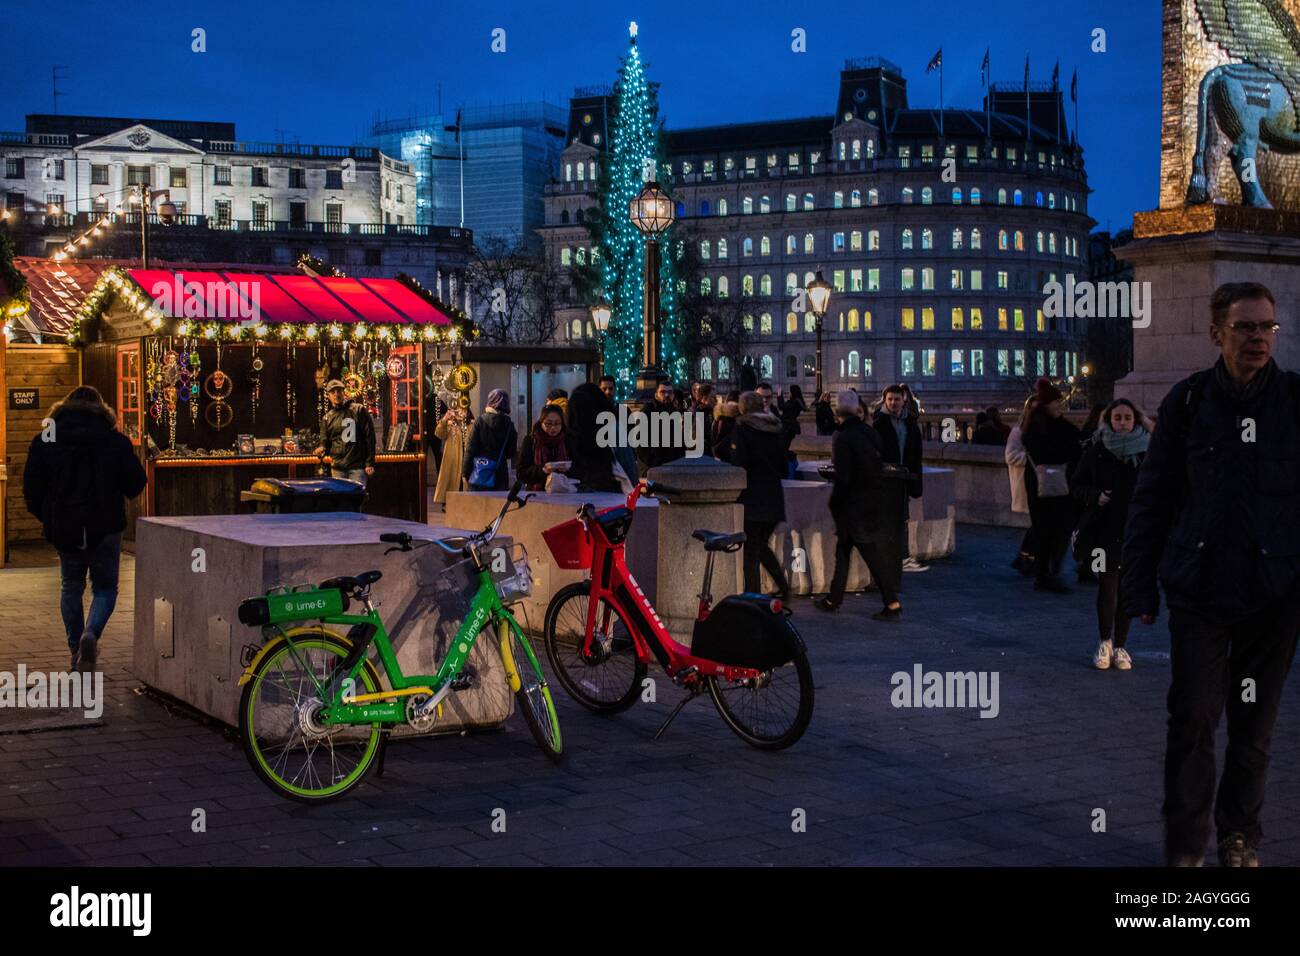 Christmas market in Trafalgar Square, London. UK Stock Photo